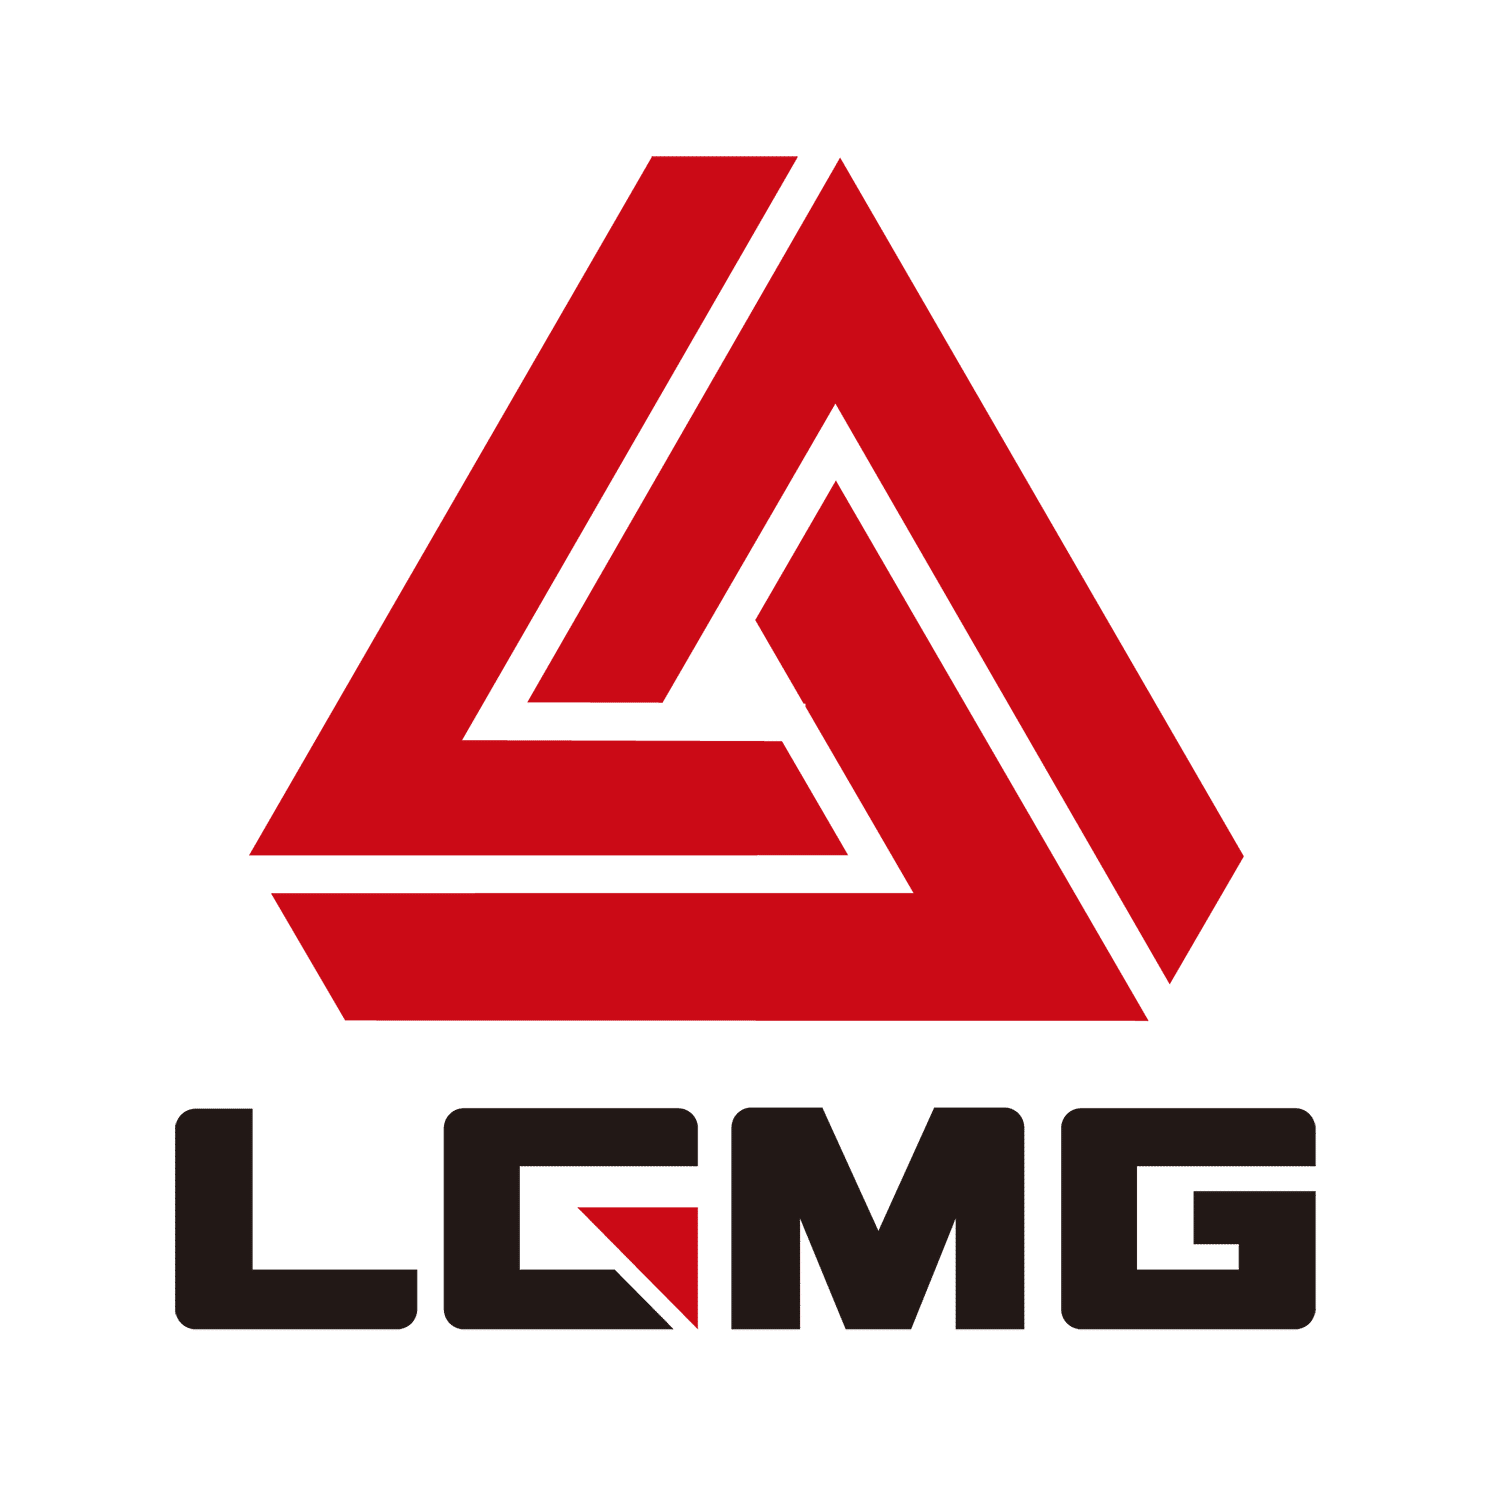 LGMG-LOGO-2